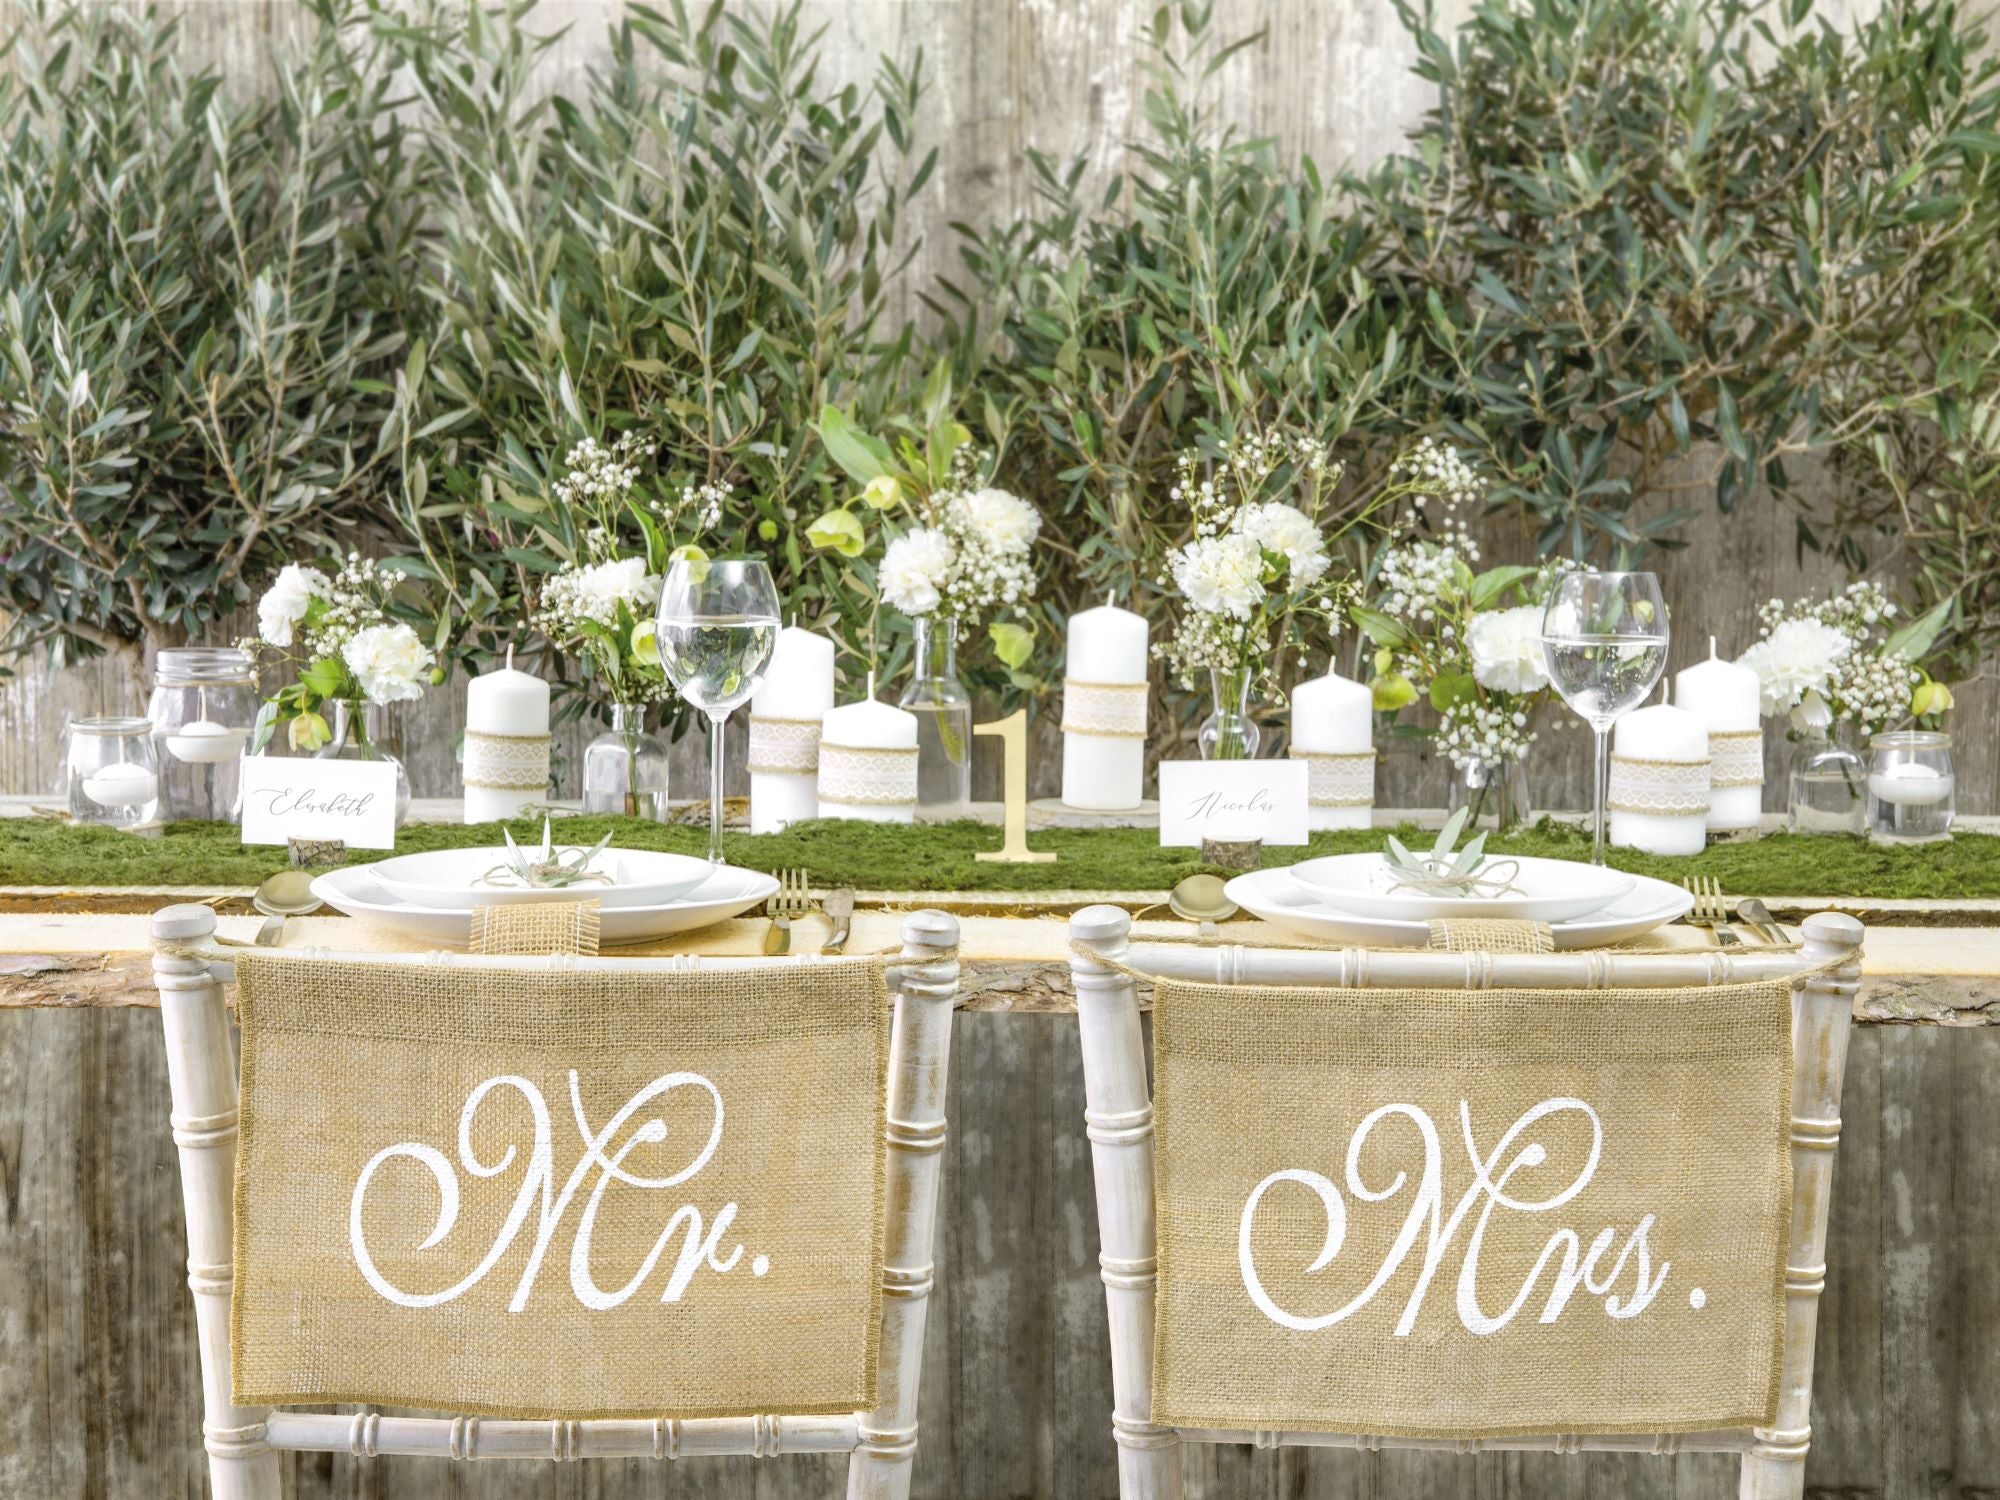 Bride Groom Burlap Chair Signs wedding decorations